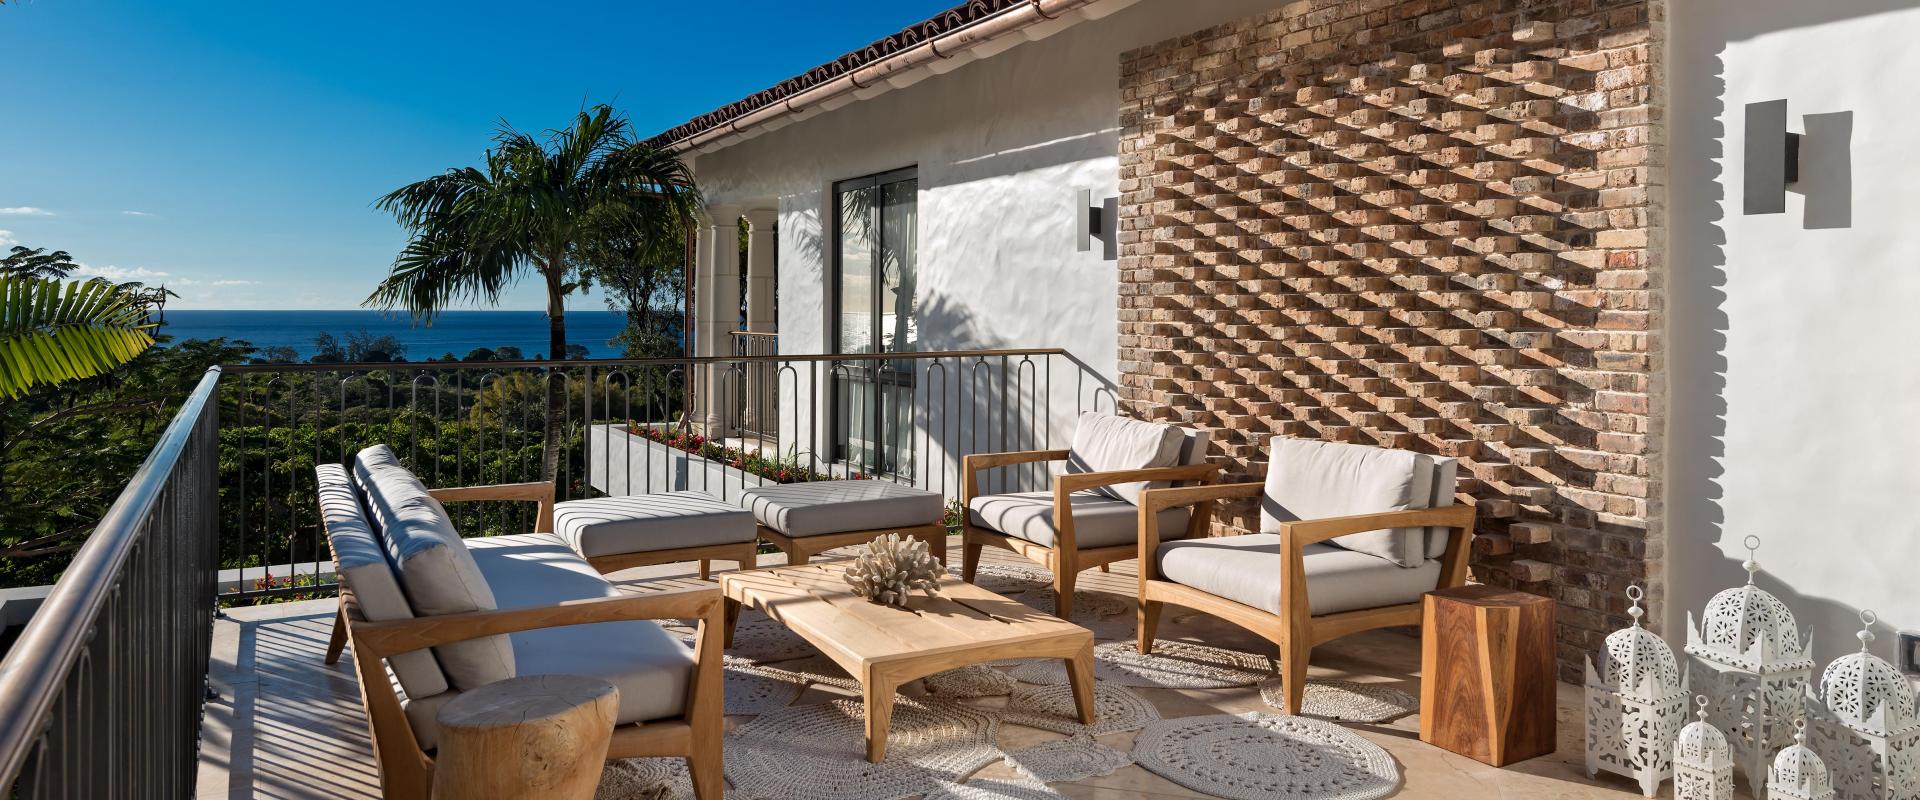 Lounge Seating Elsewhere 10 Bedroom Sandy Lane Villa For Rent In Barbados 